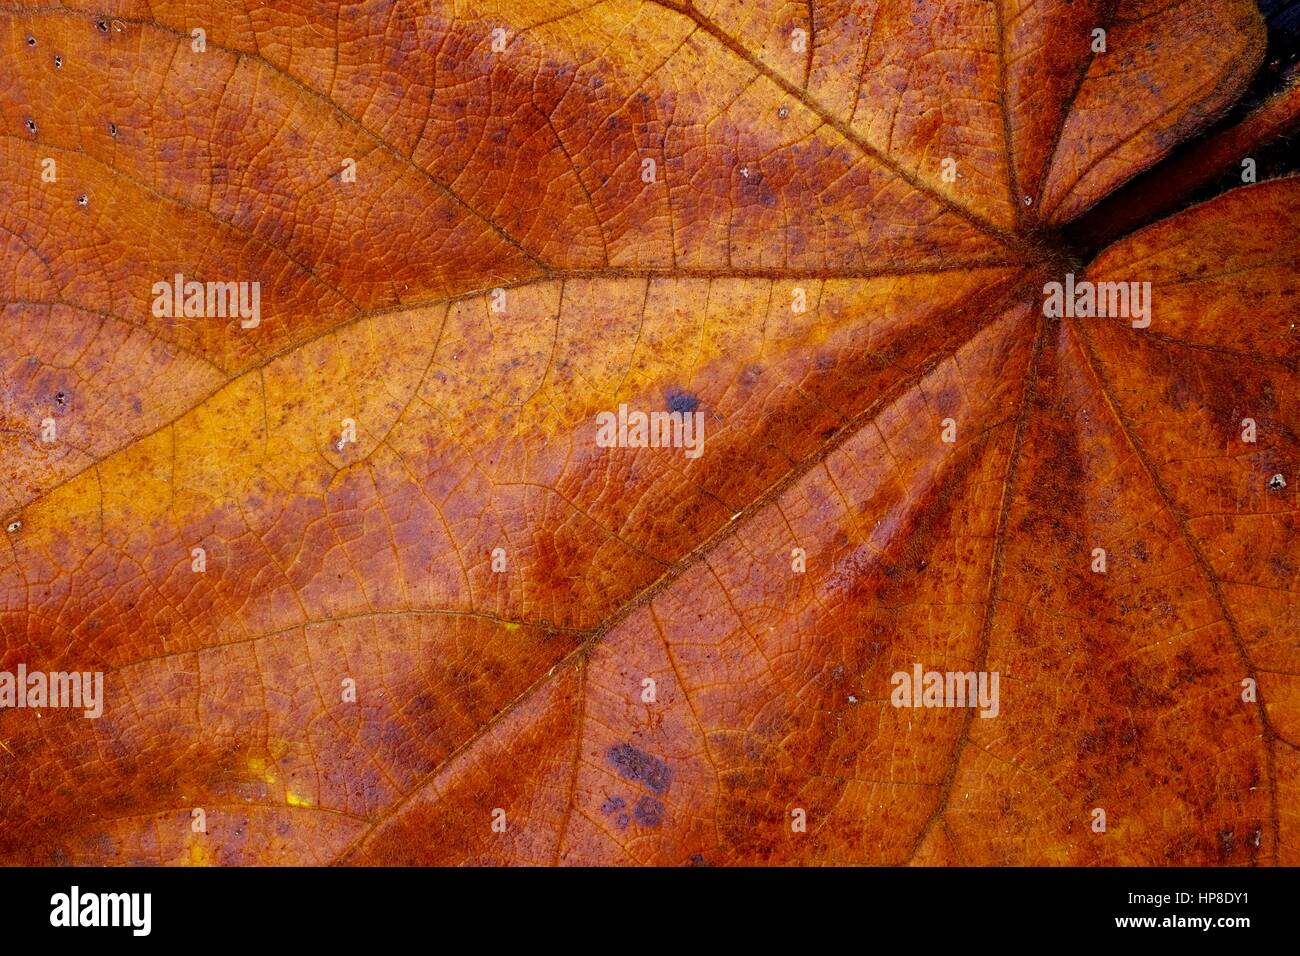 Leaf veins Stock Photo